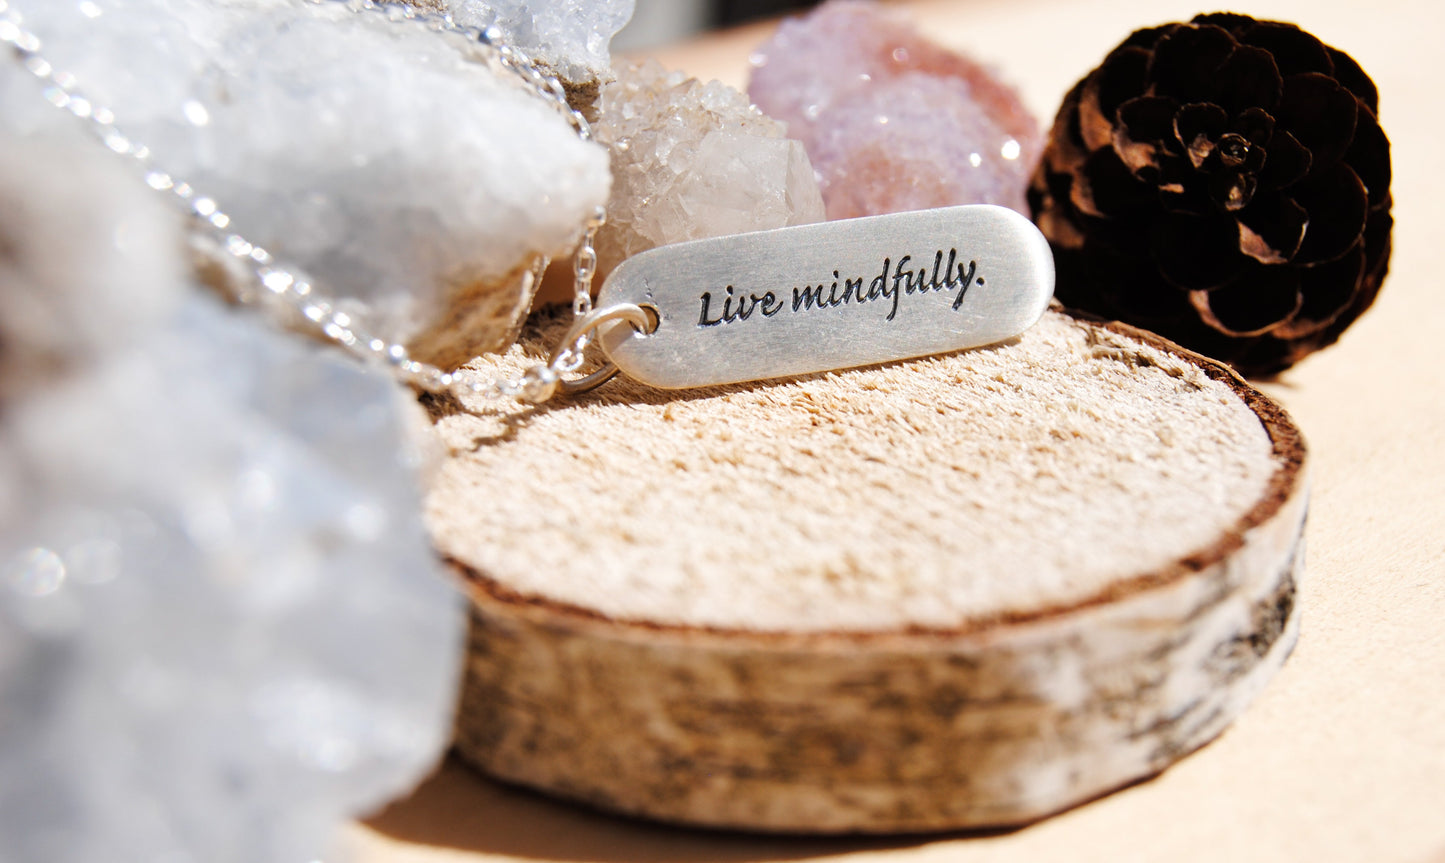 Live mindfully